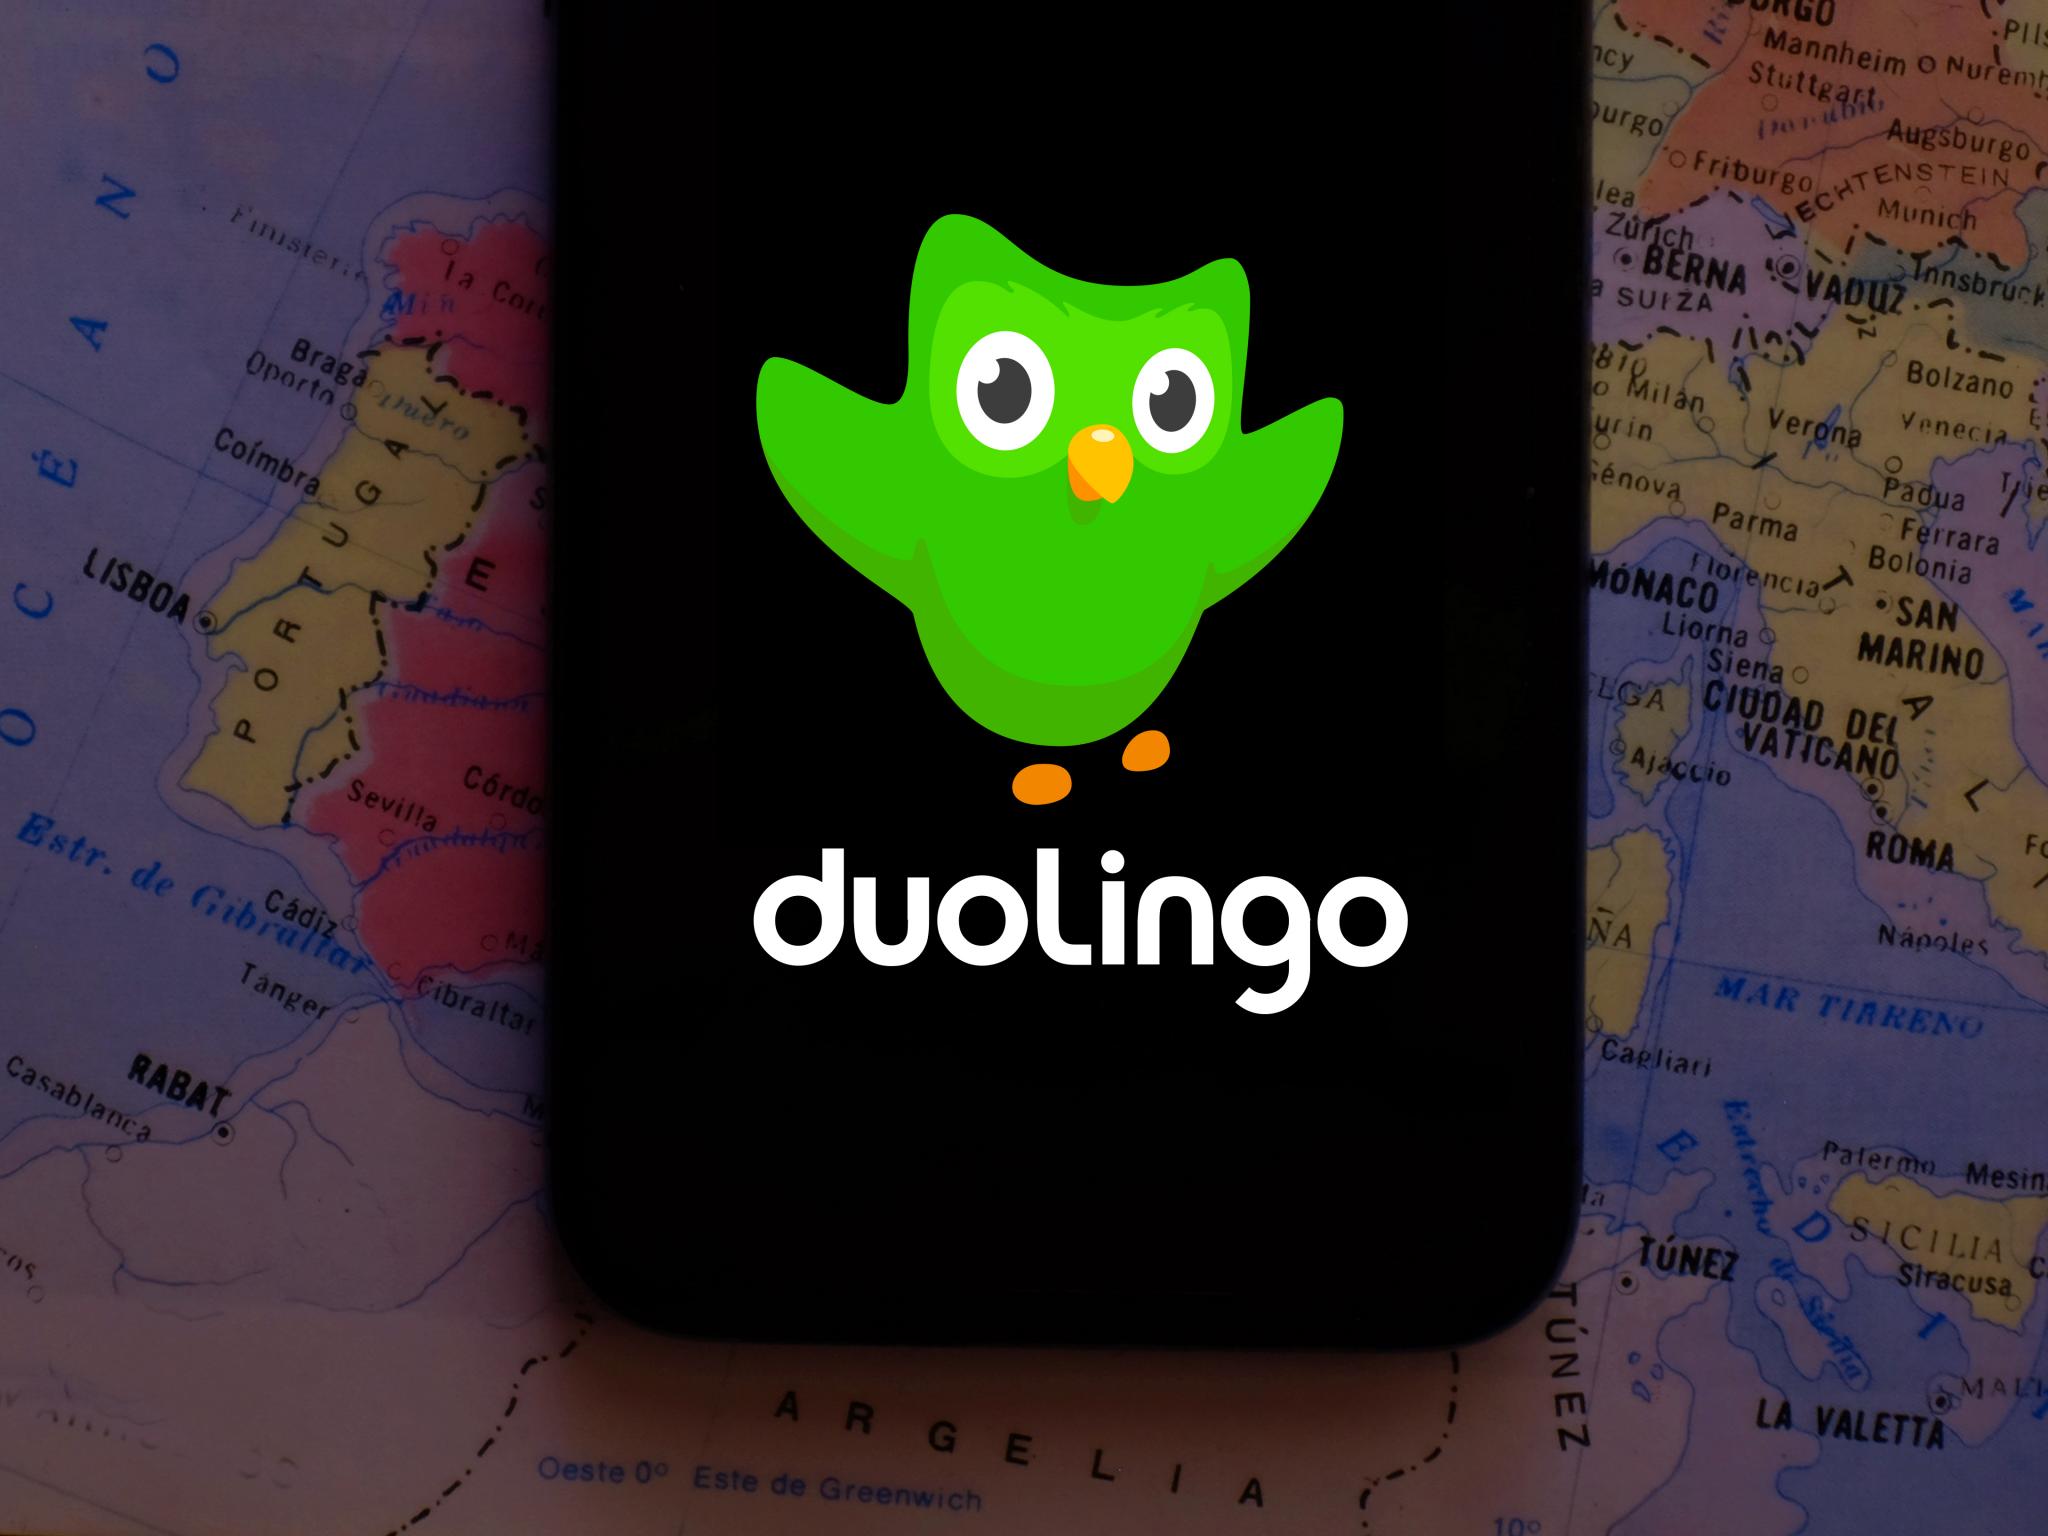  language-lesson-app-duolingo-poised-for-strong-user-growth-bullish-analyst-says 